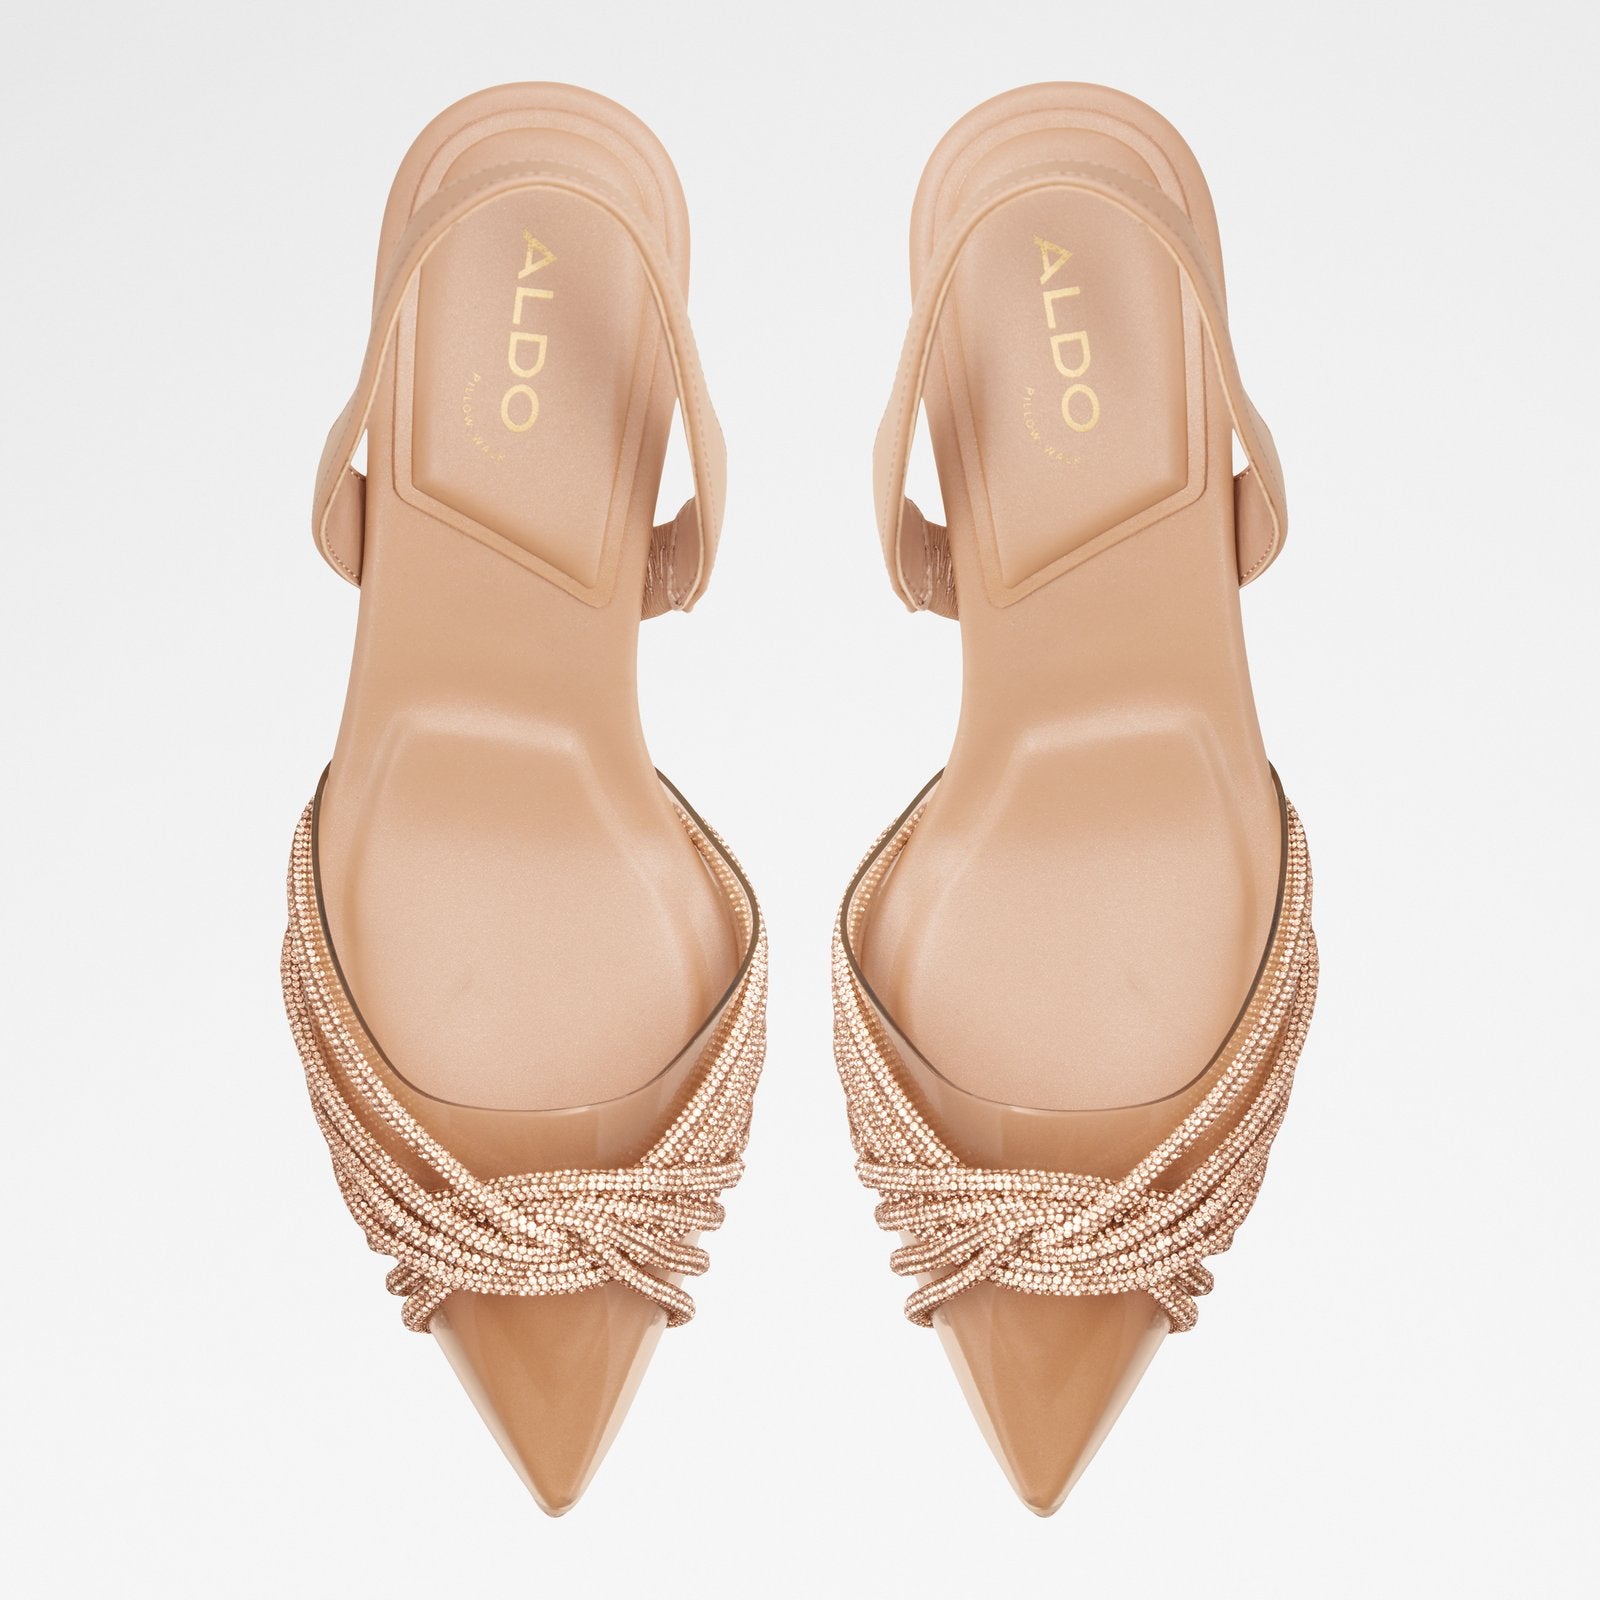 Elega / Heeled Shoes